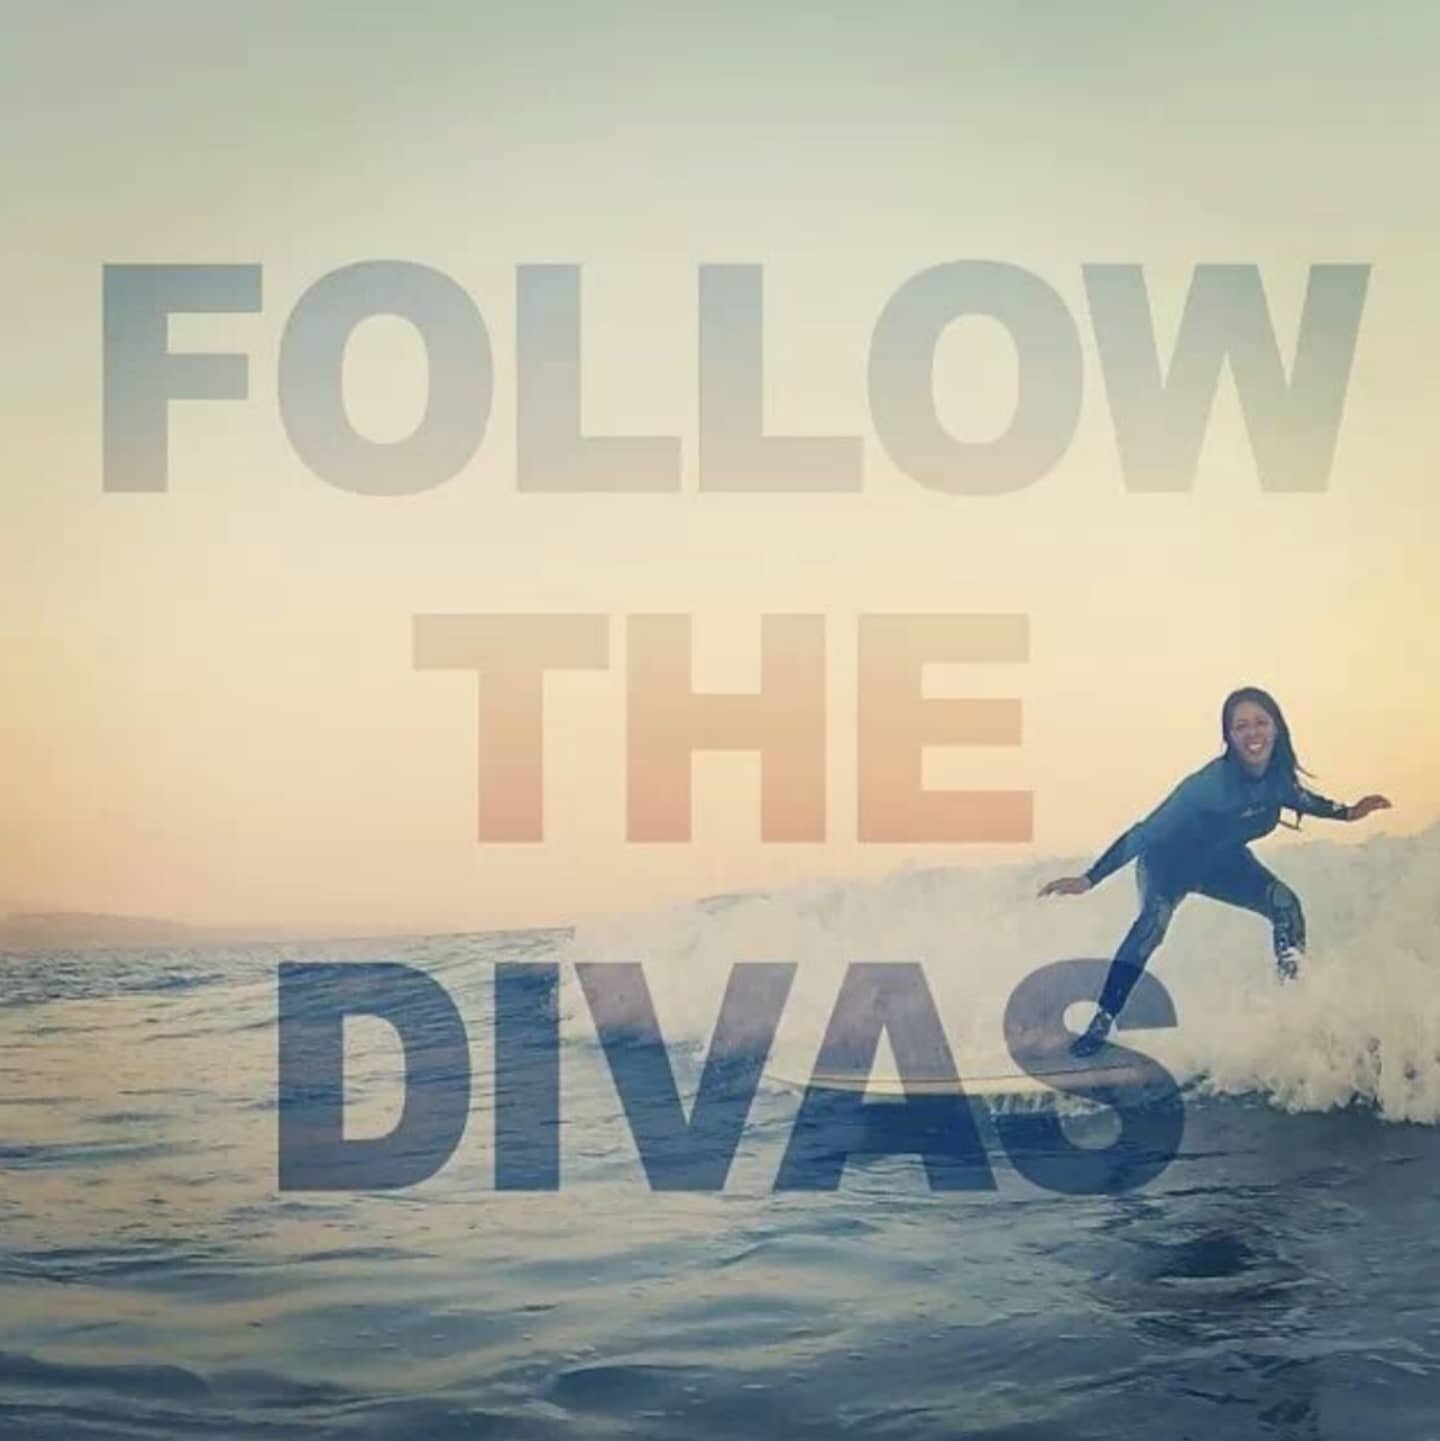 Welcome Back Divas Party in the 805! 
https://www.meetup.com/Salt-Water-Divas-A-Surf-Sisterhood/events/277988920/
#surfergirls #timetoparty